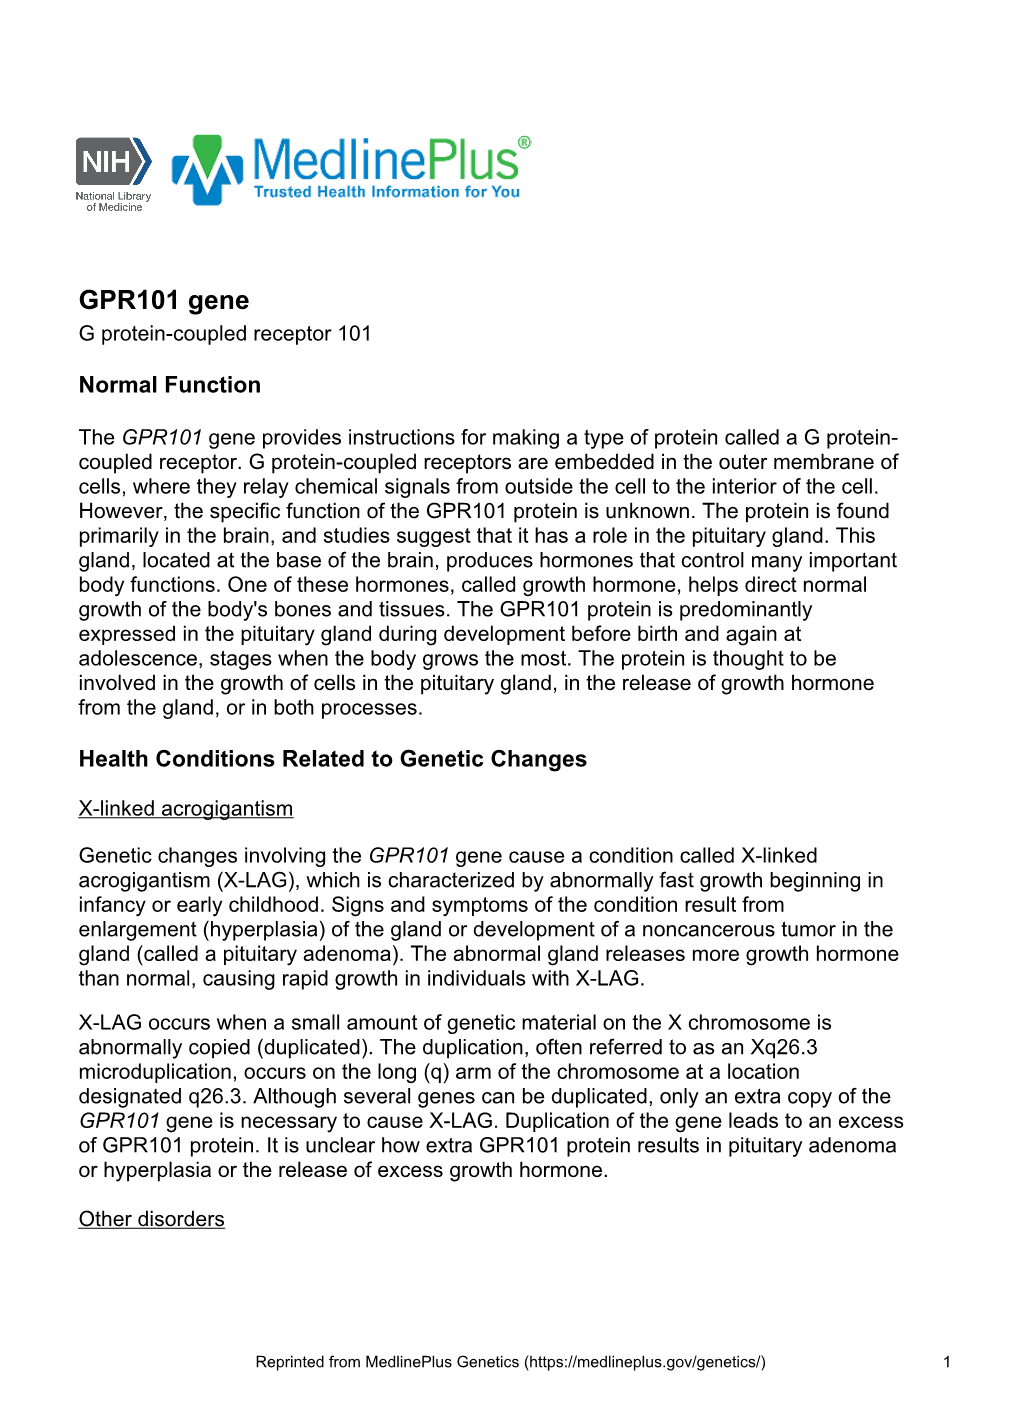 GPR101 Gene G Protein-Coupled Receptor 101